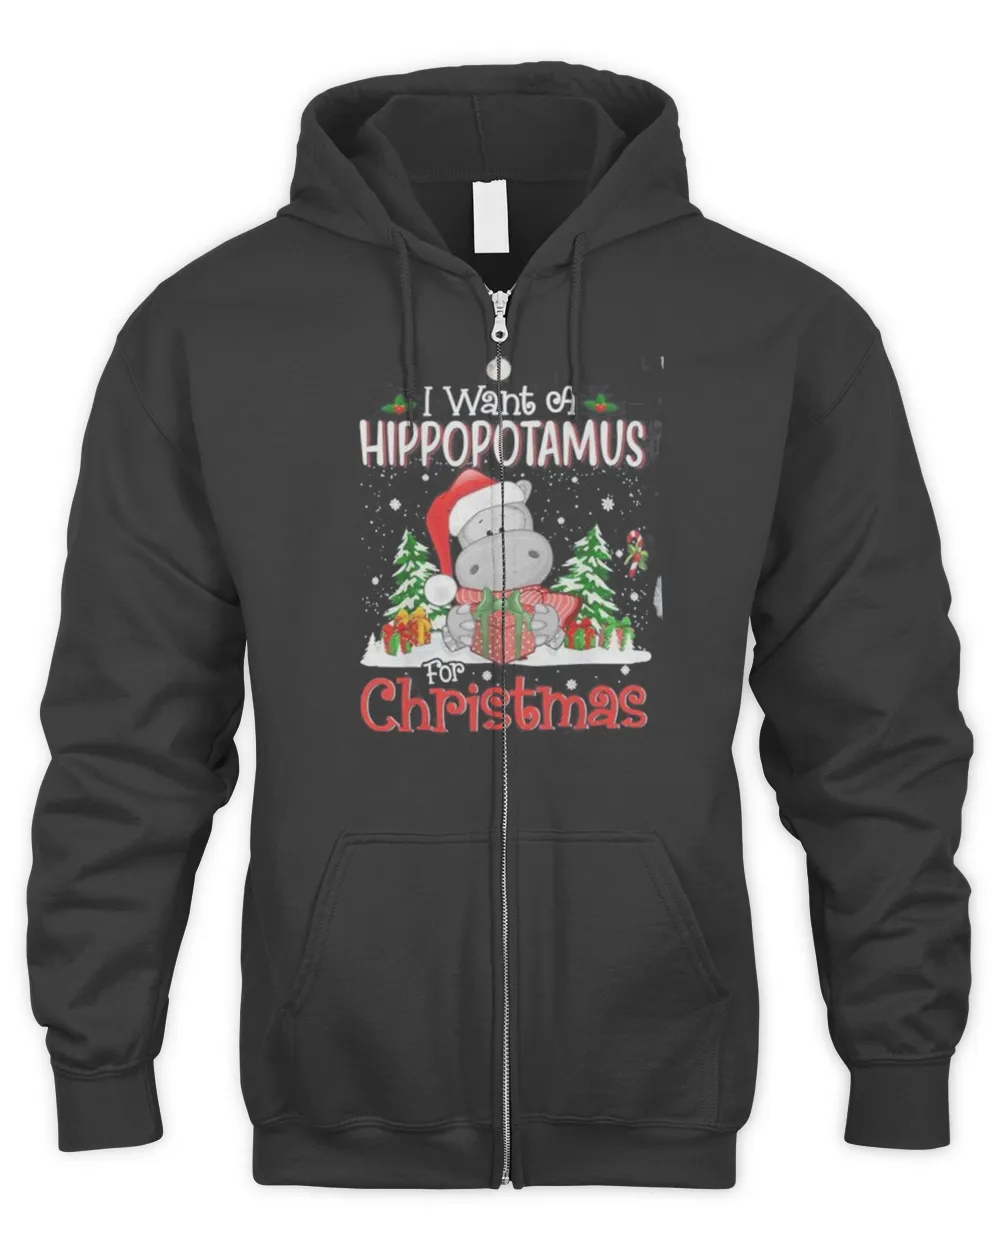 I want a hippopotamus for Christmas shirt